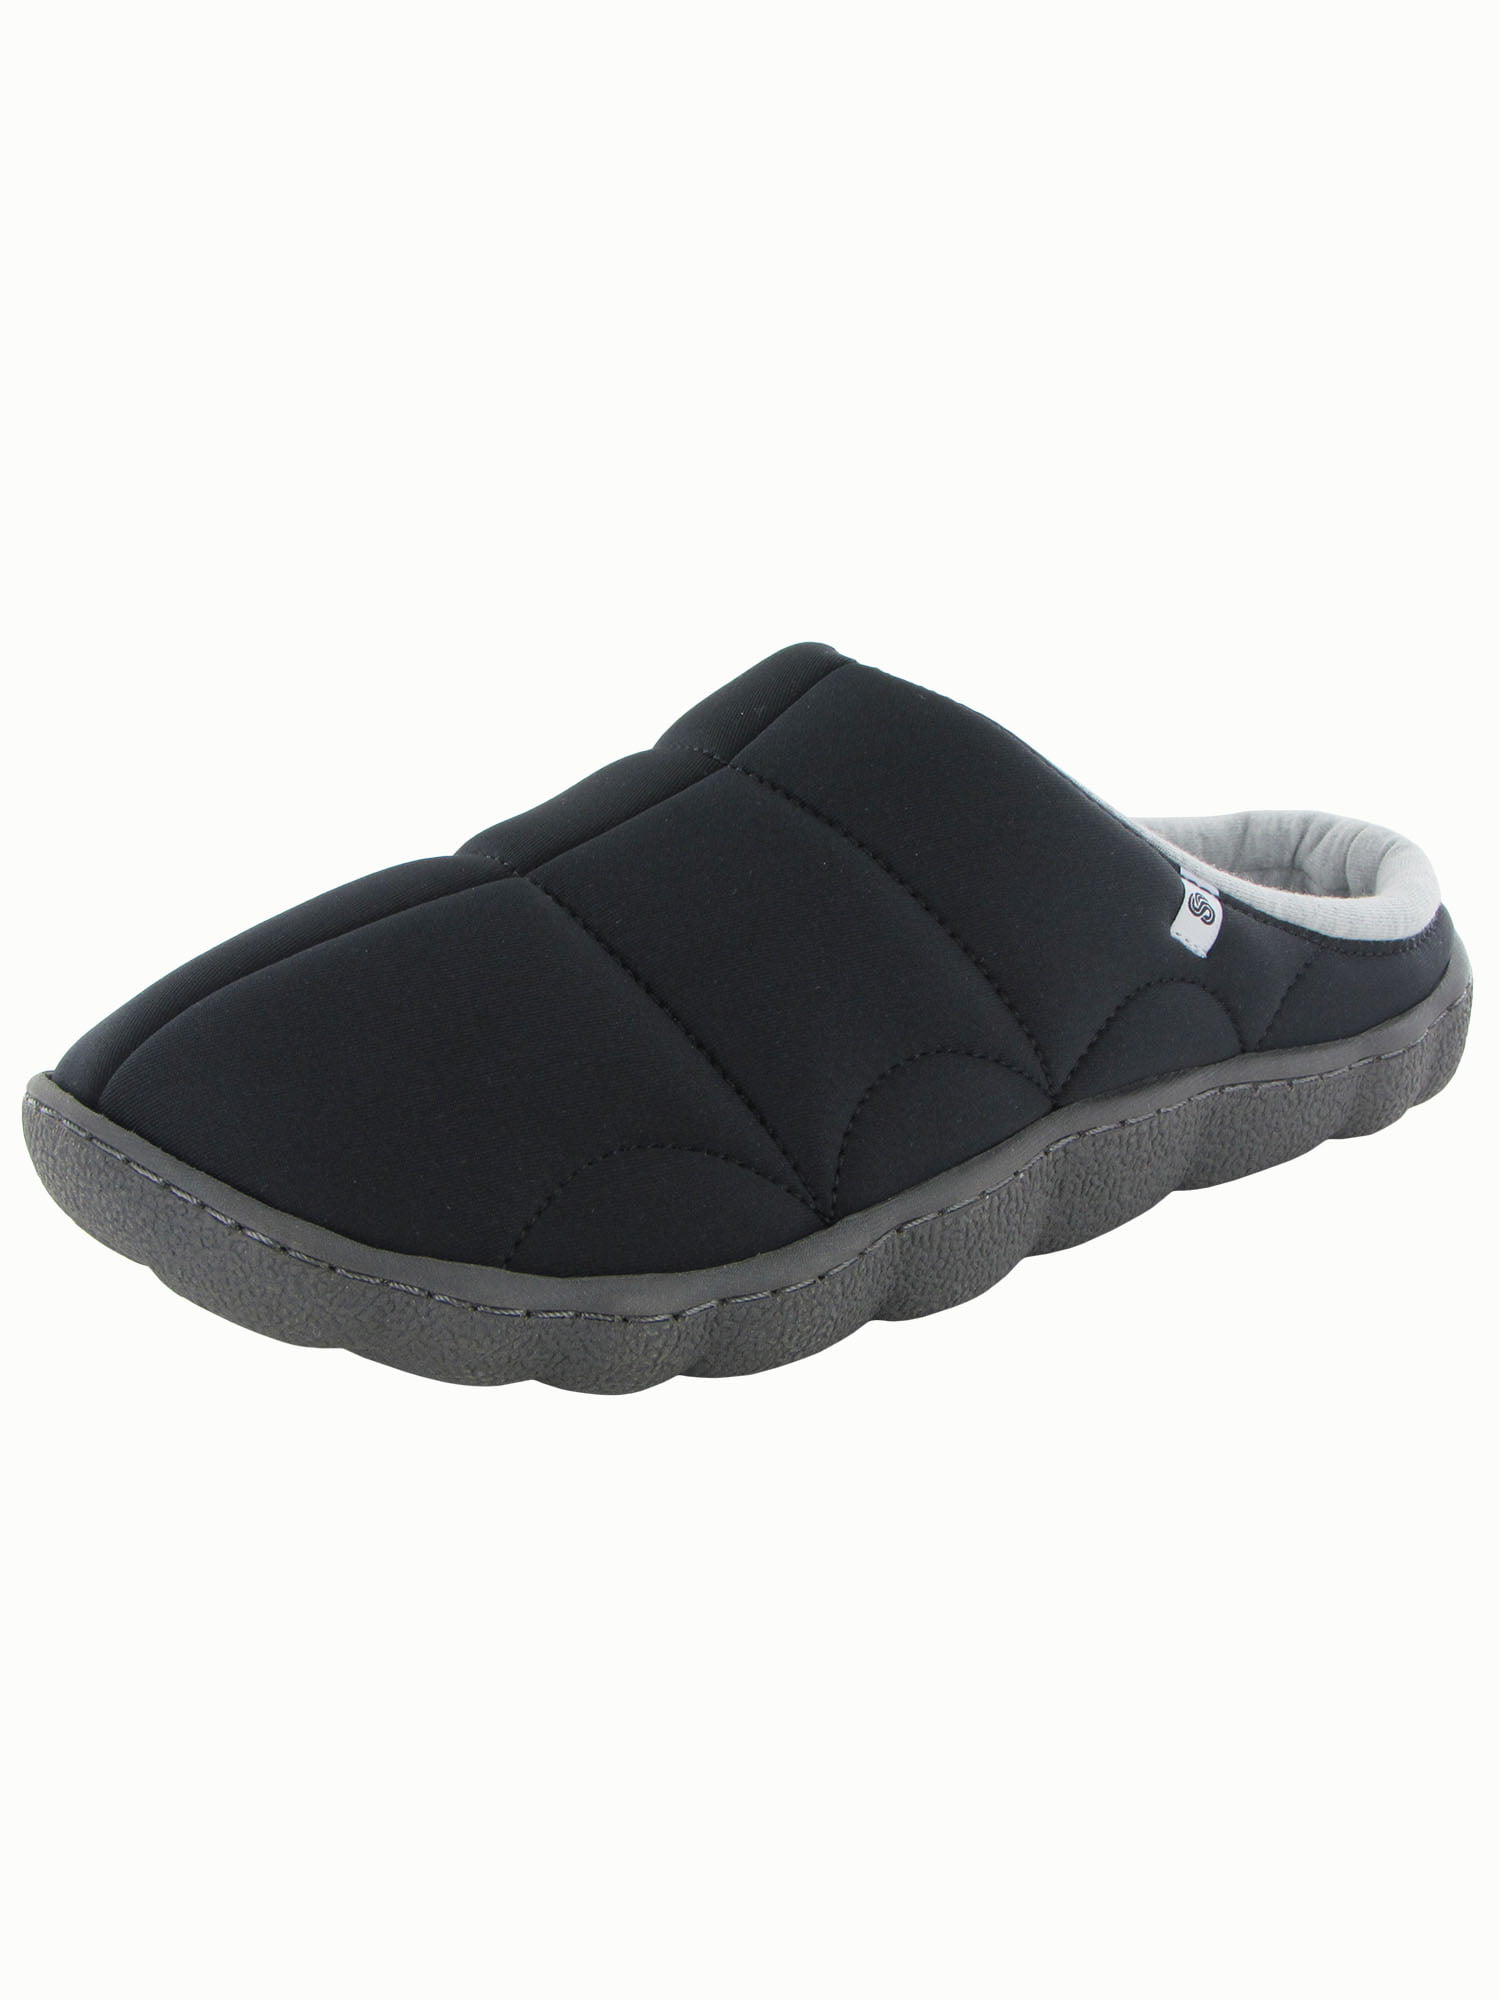 cloudstepper slippers